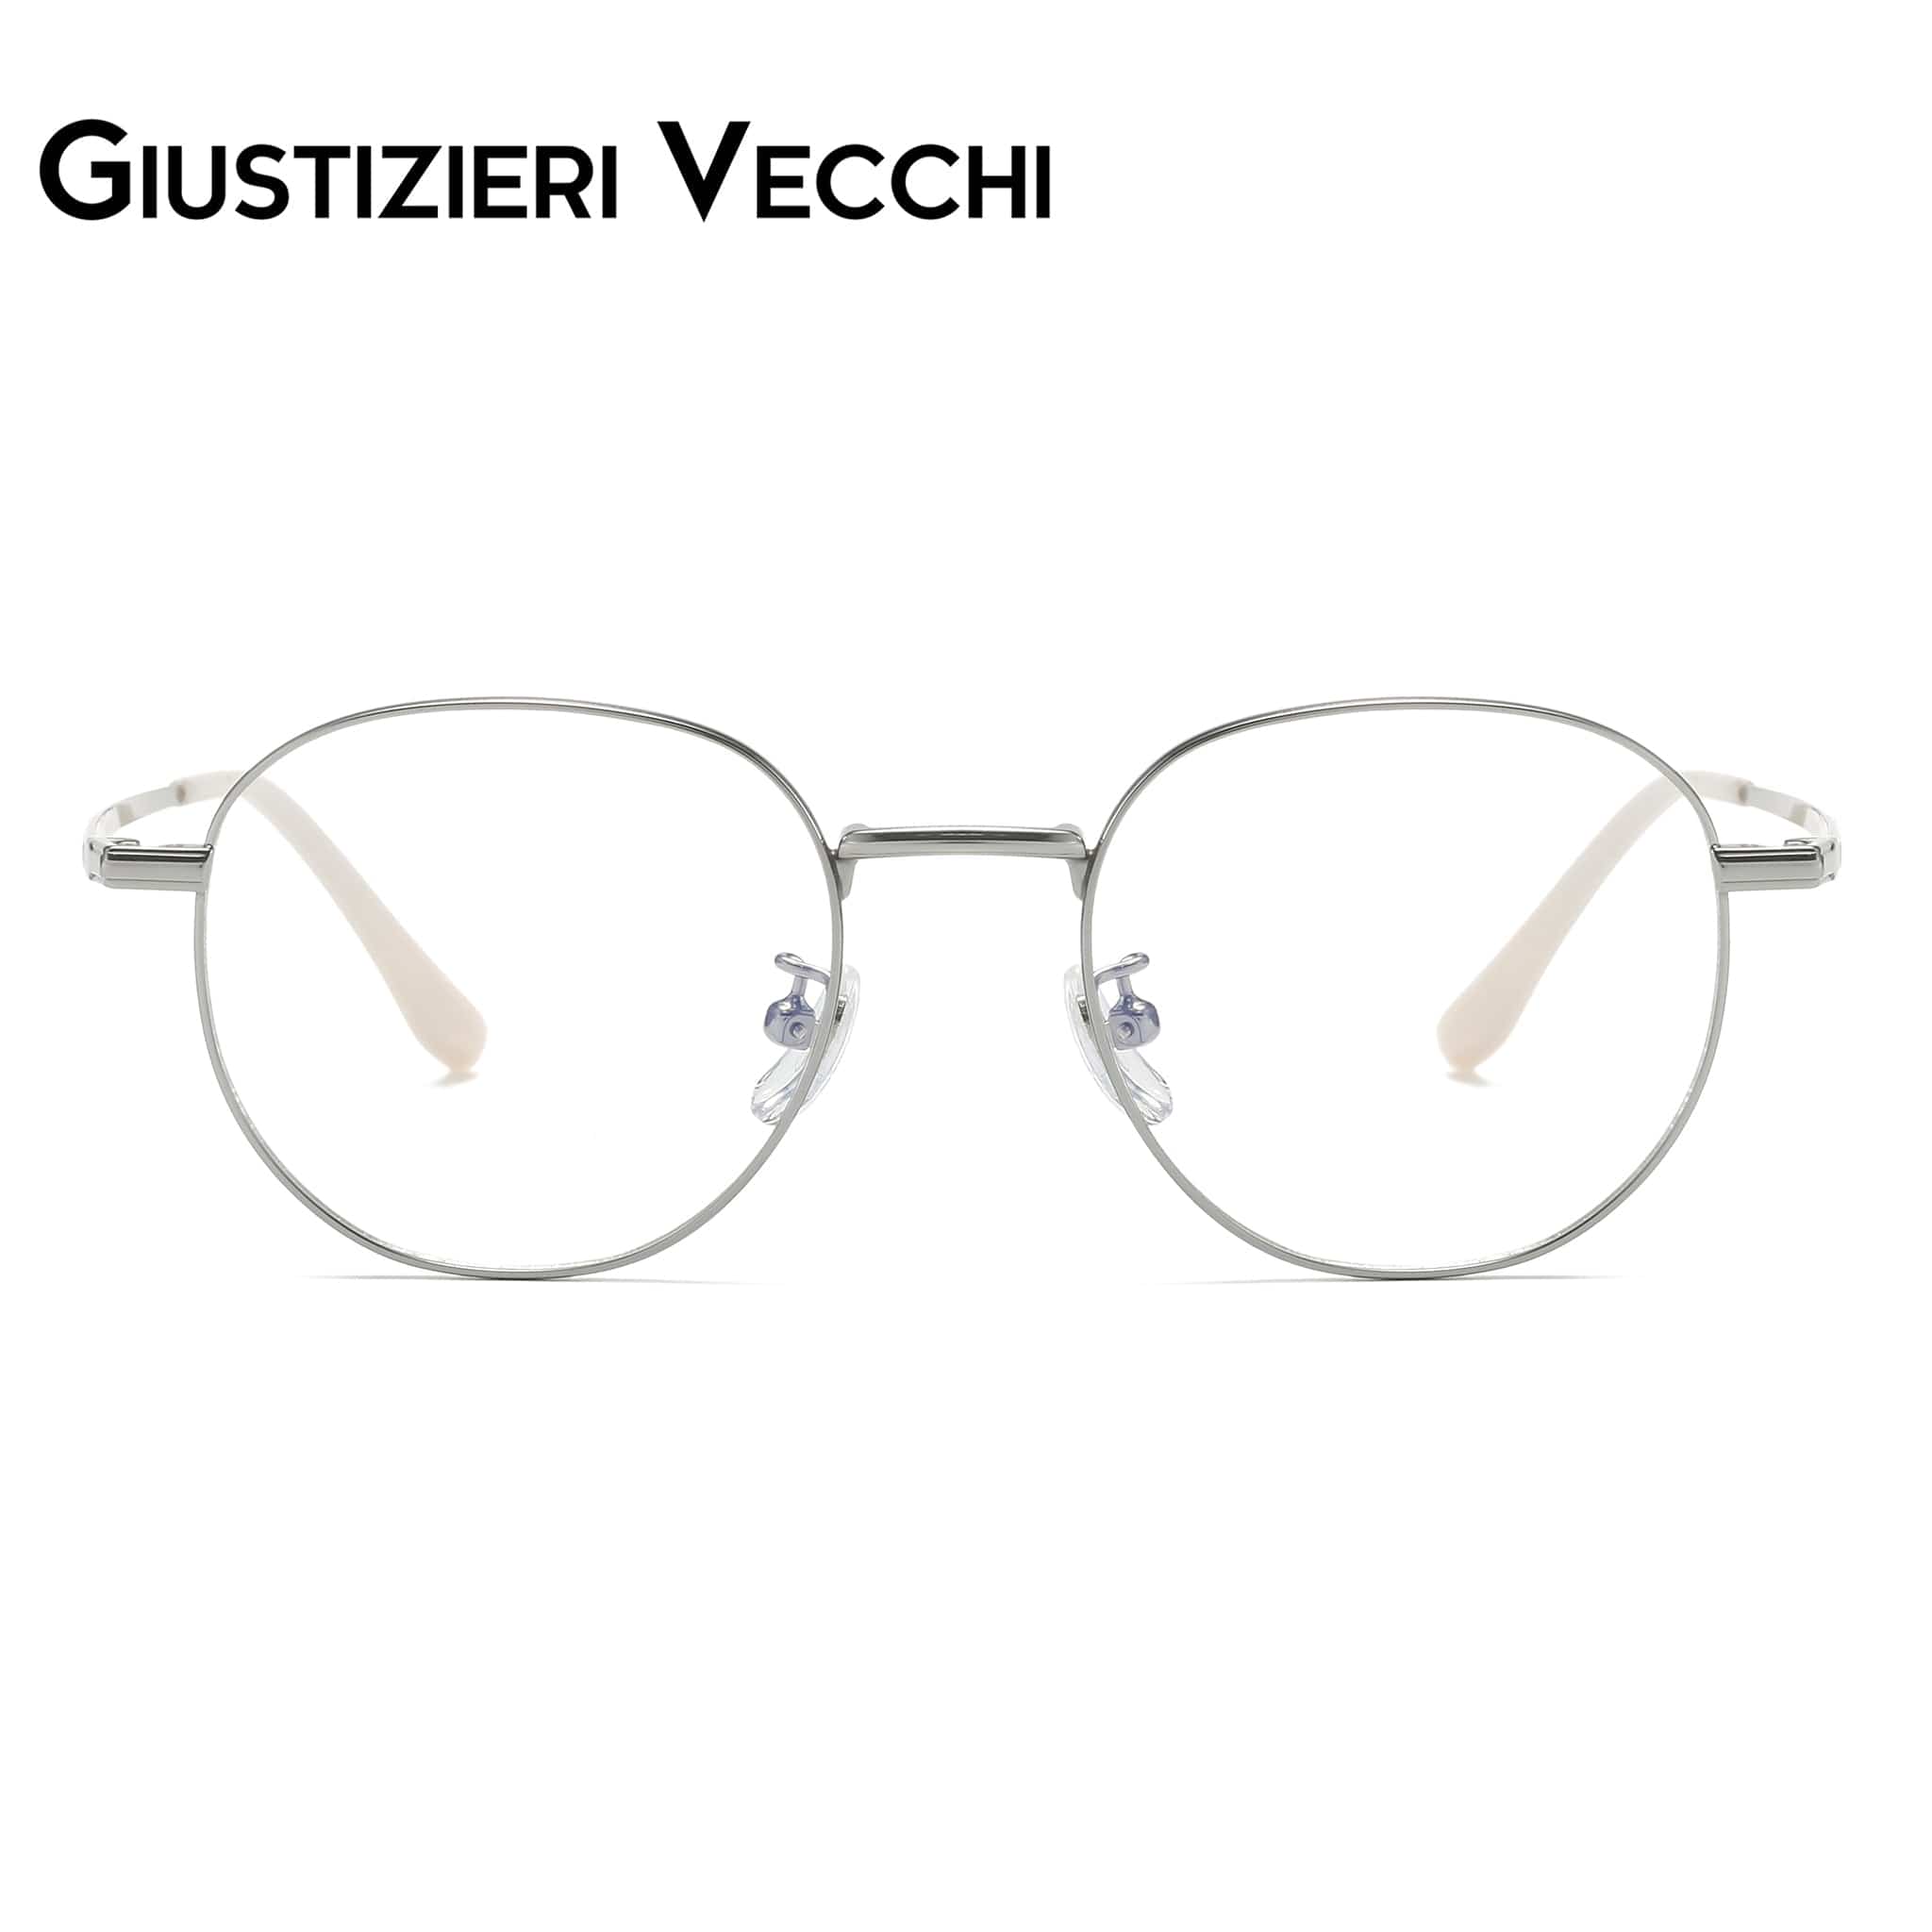 GIUSTIZIERI VECCHI Eyeglasses Small / Silver Kiwi Kiss Duo